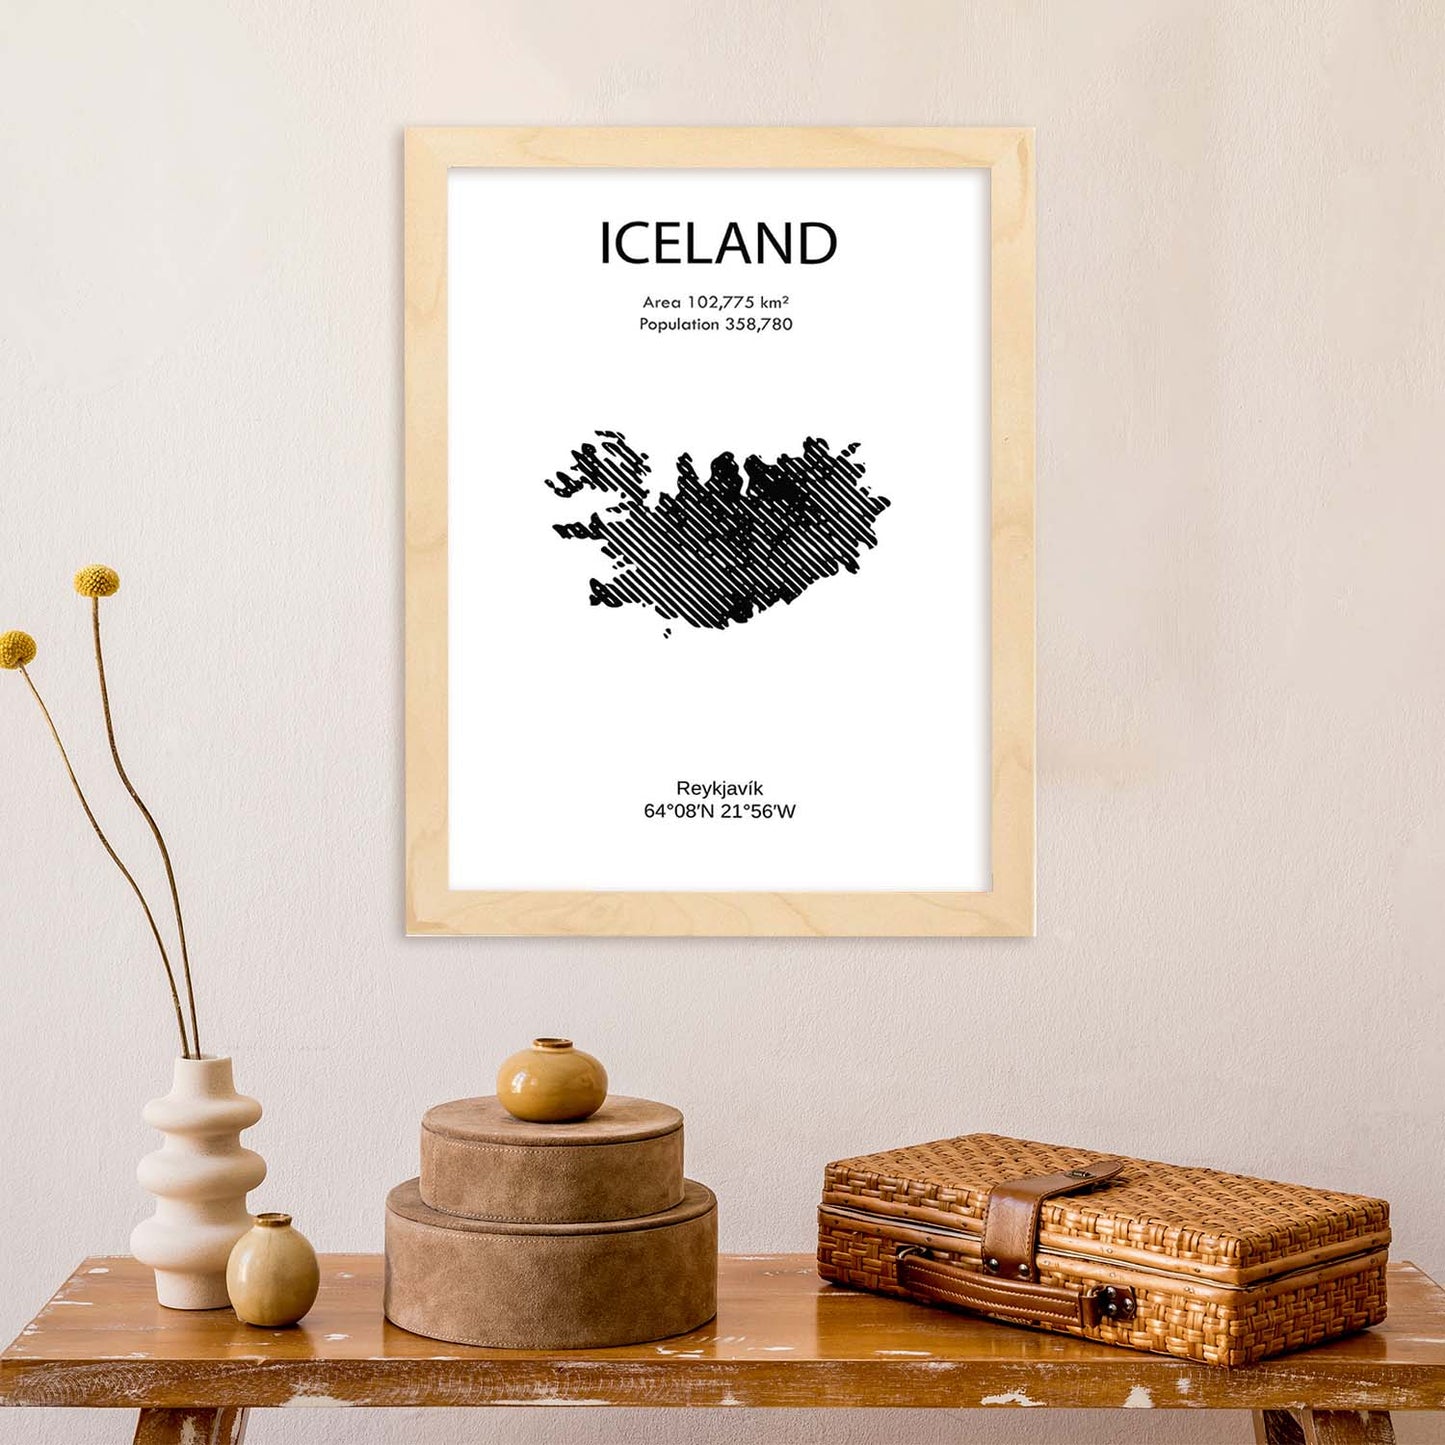 Poster de Islandia. Láminas de paises y continentes del mundo.-Artwork-Nacnic-Nacnic Estudio SL